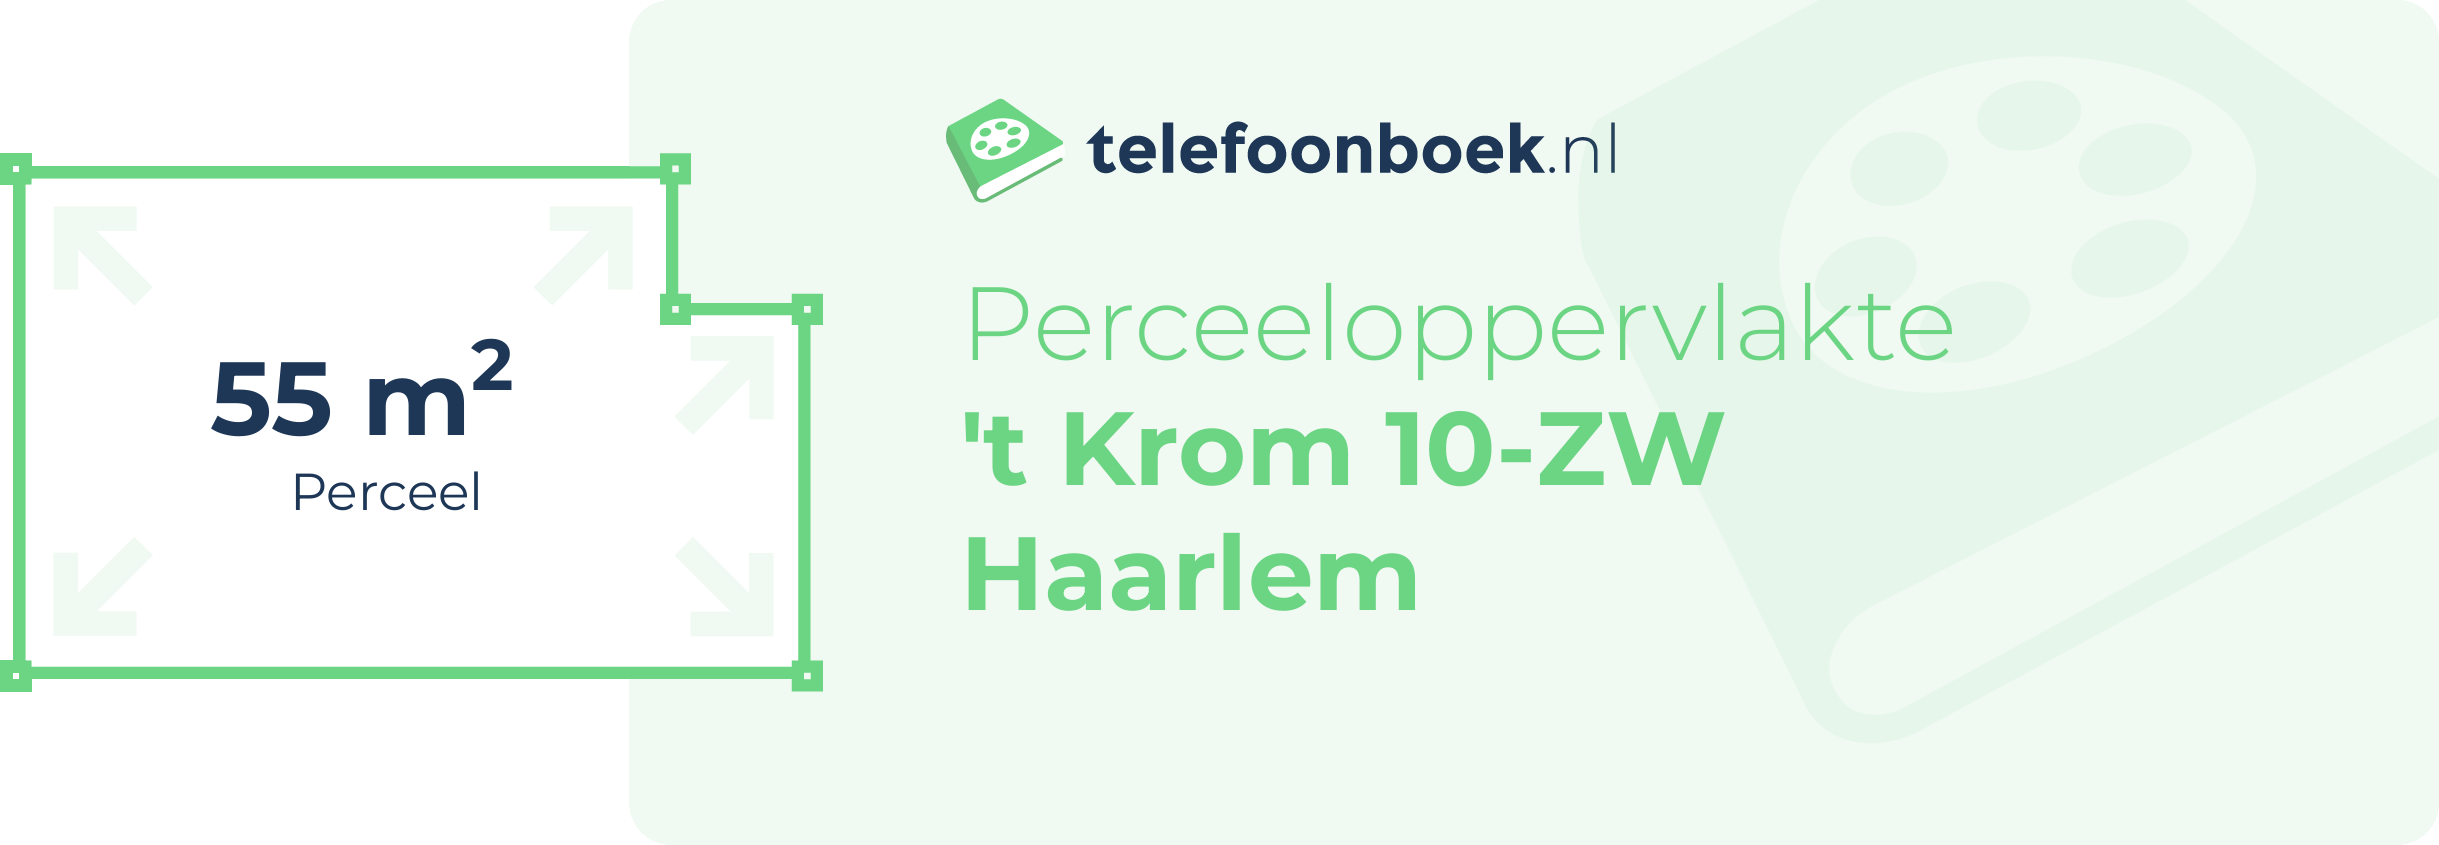 Perceeloppervlakte 't Krom 10-ZW Haarlem